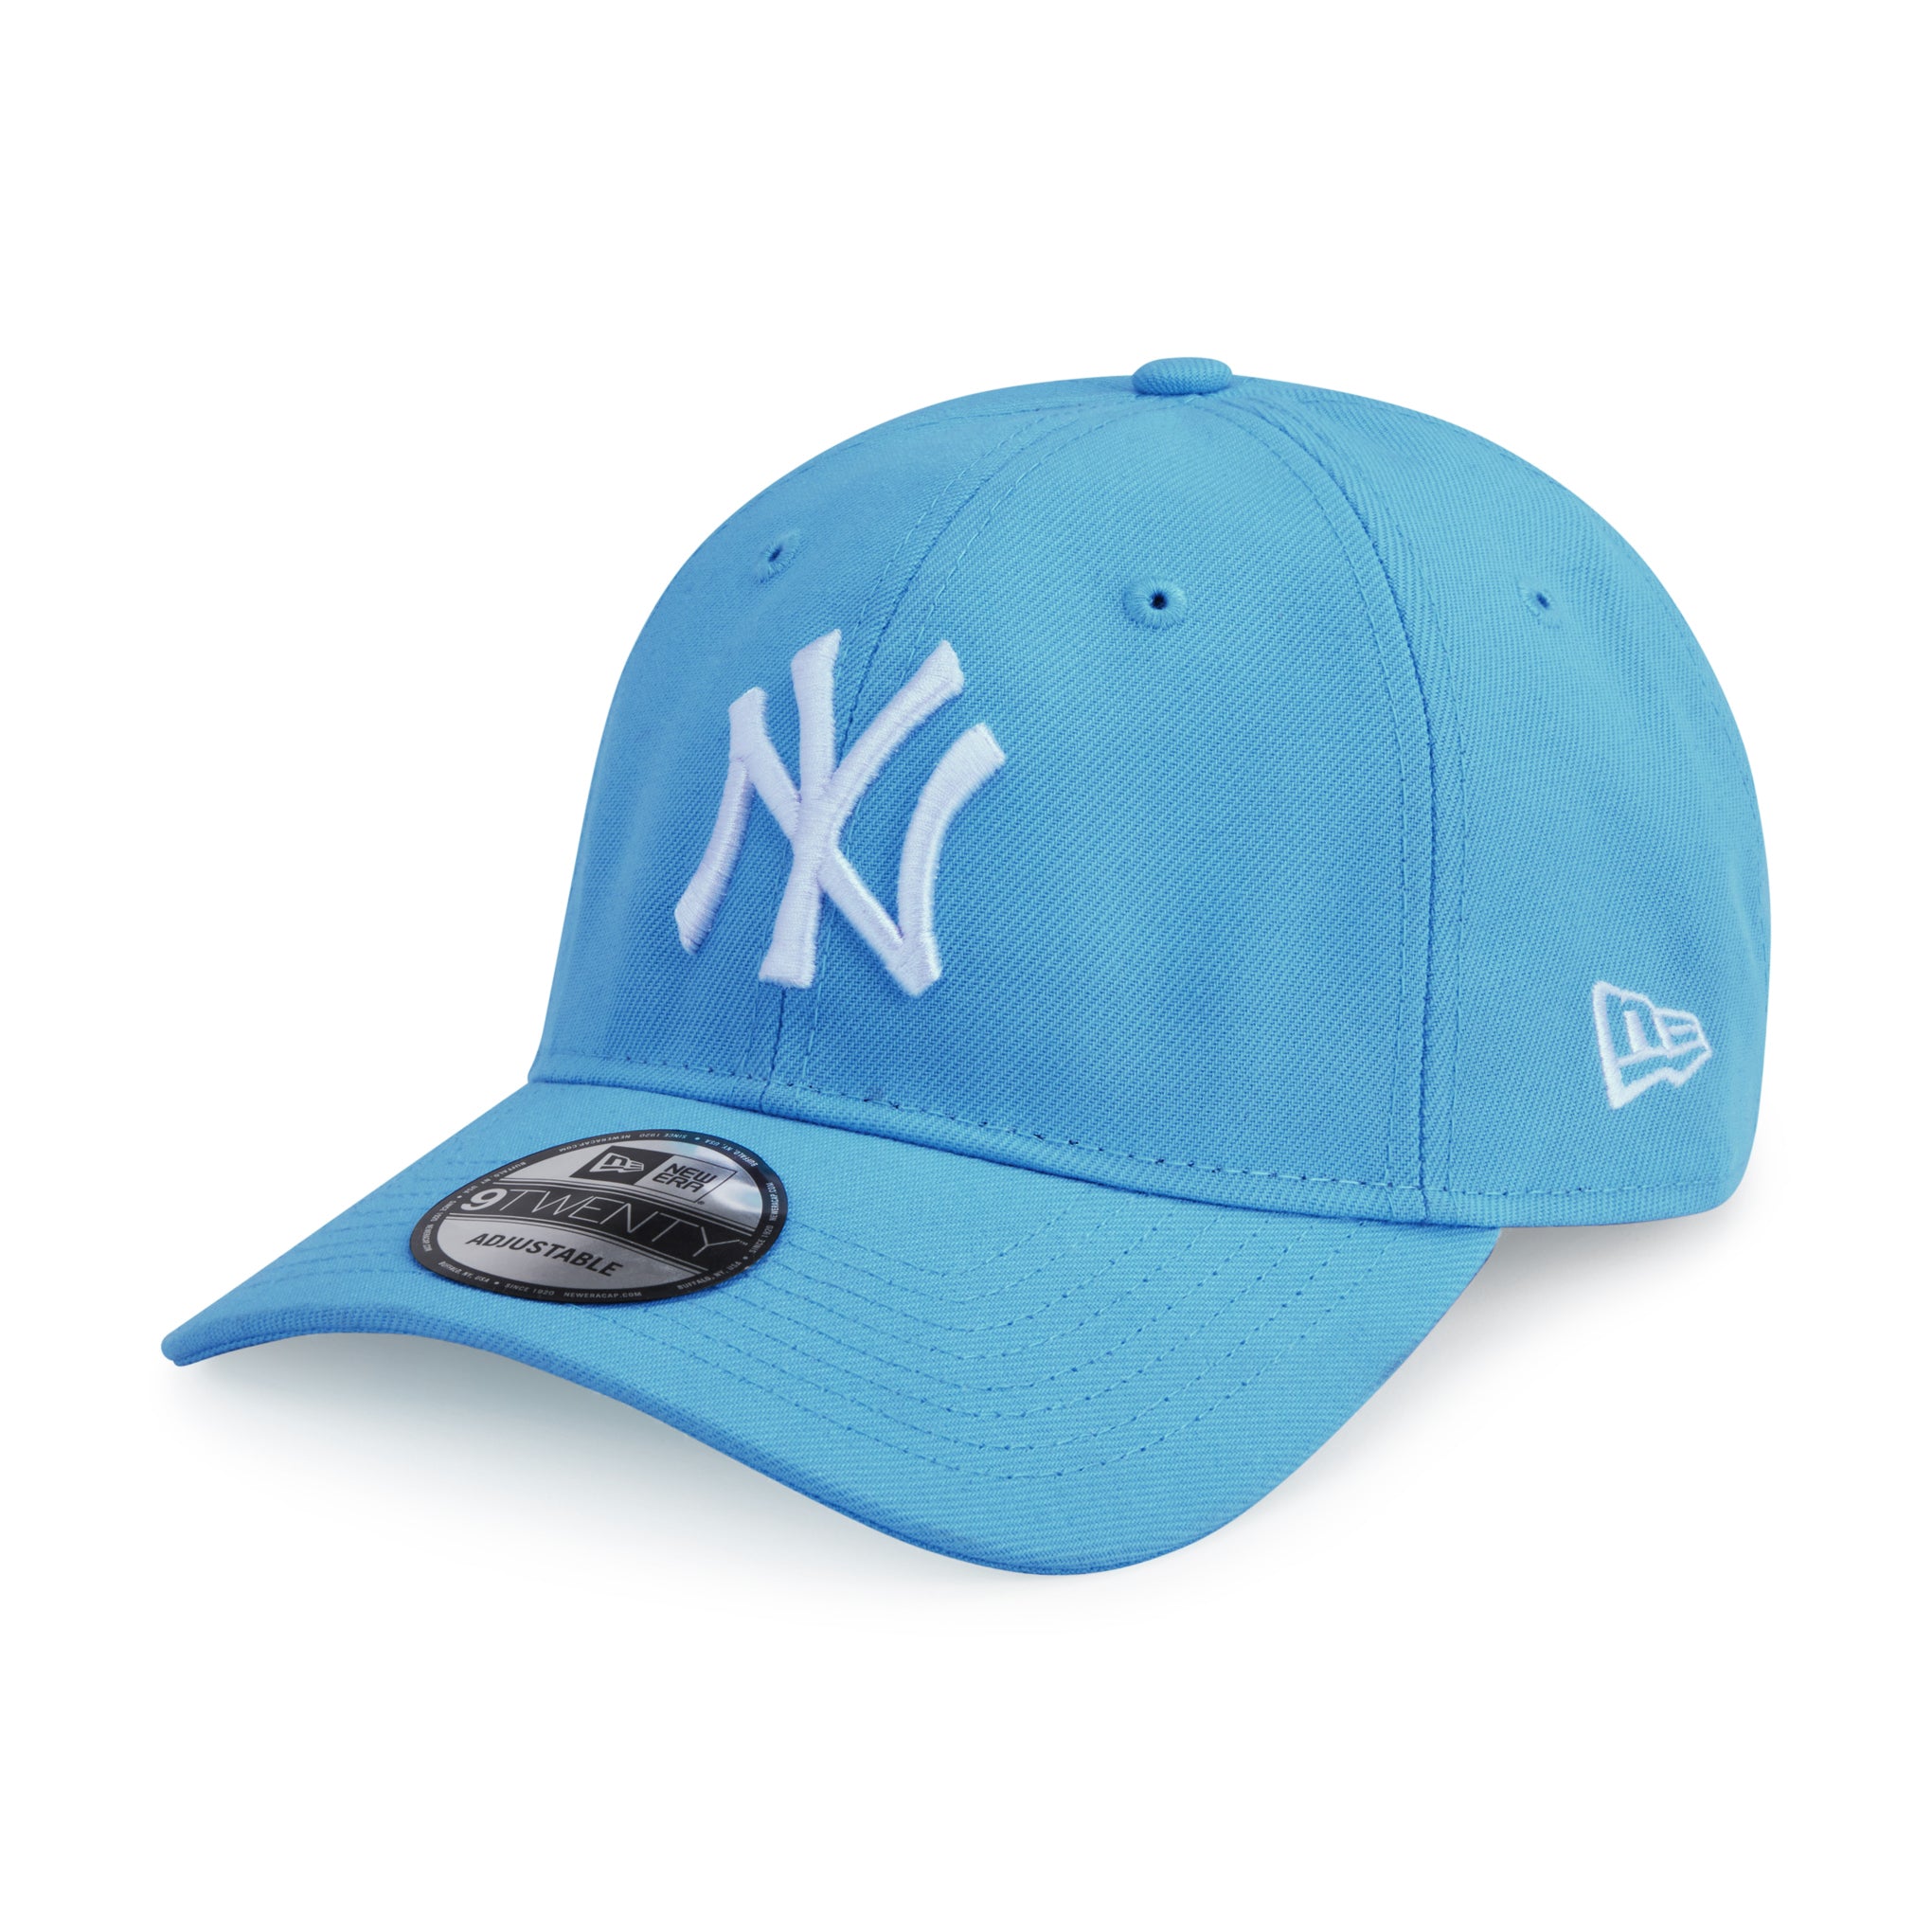 MoMA NY Yankees Adjustable Baseball Cap - Pastel Blue